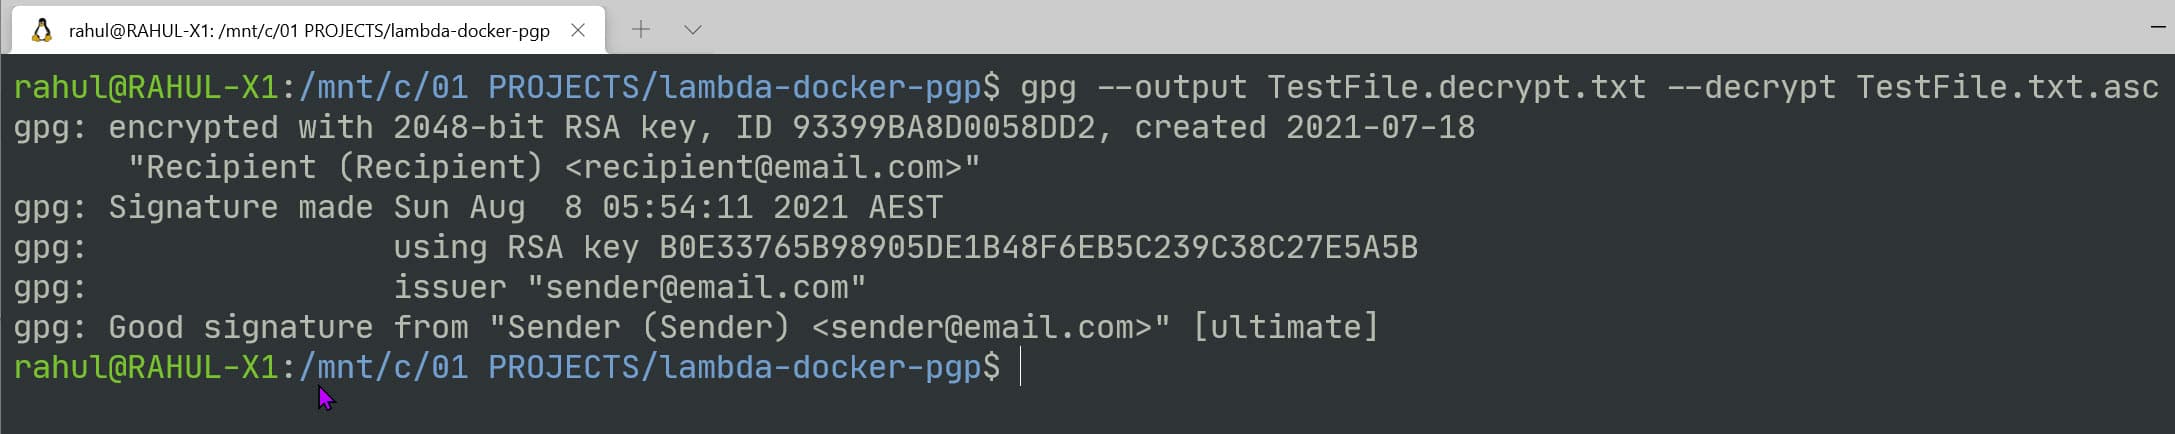 gpg decrypt output with signature verification